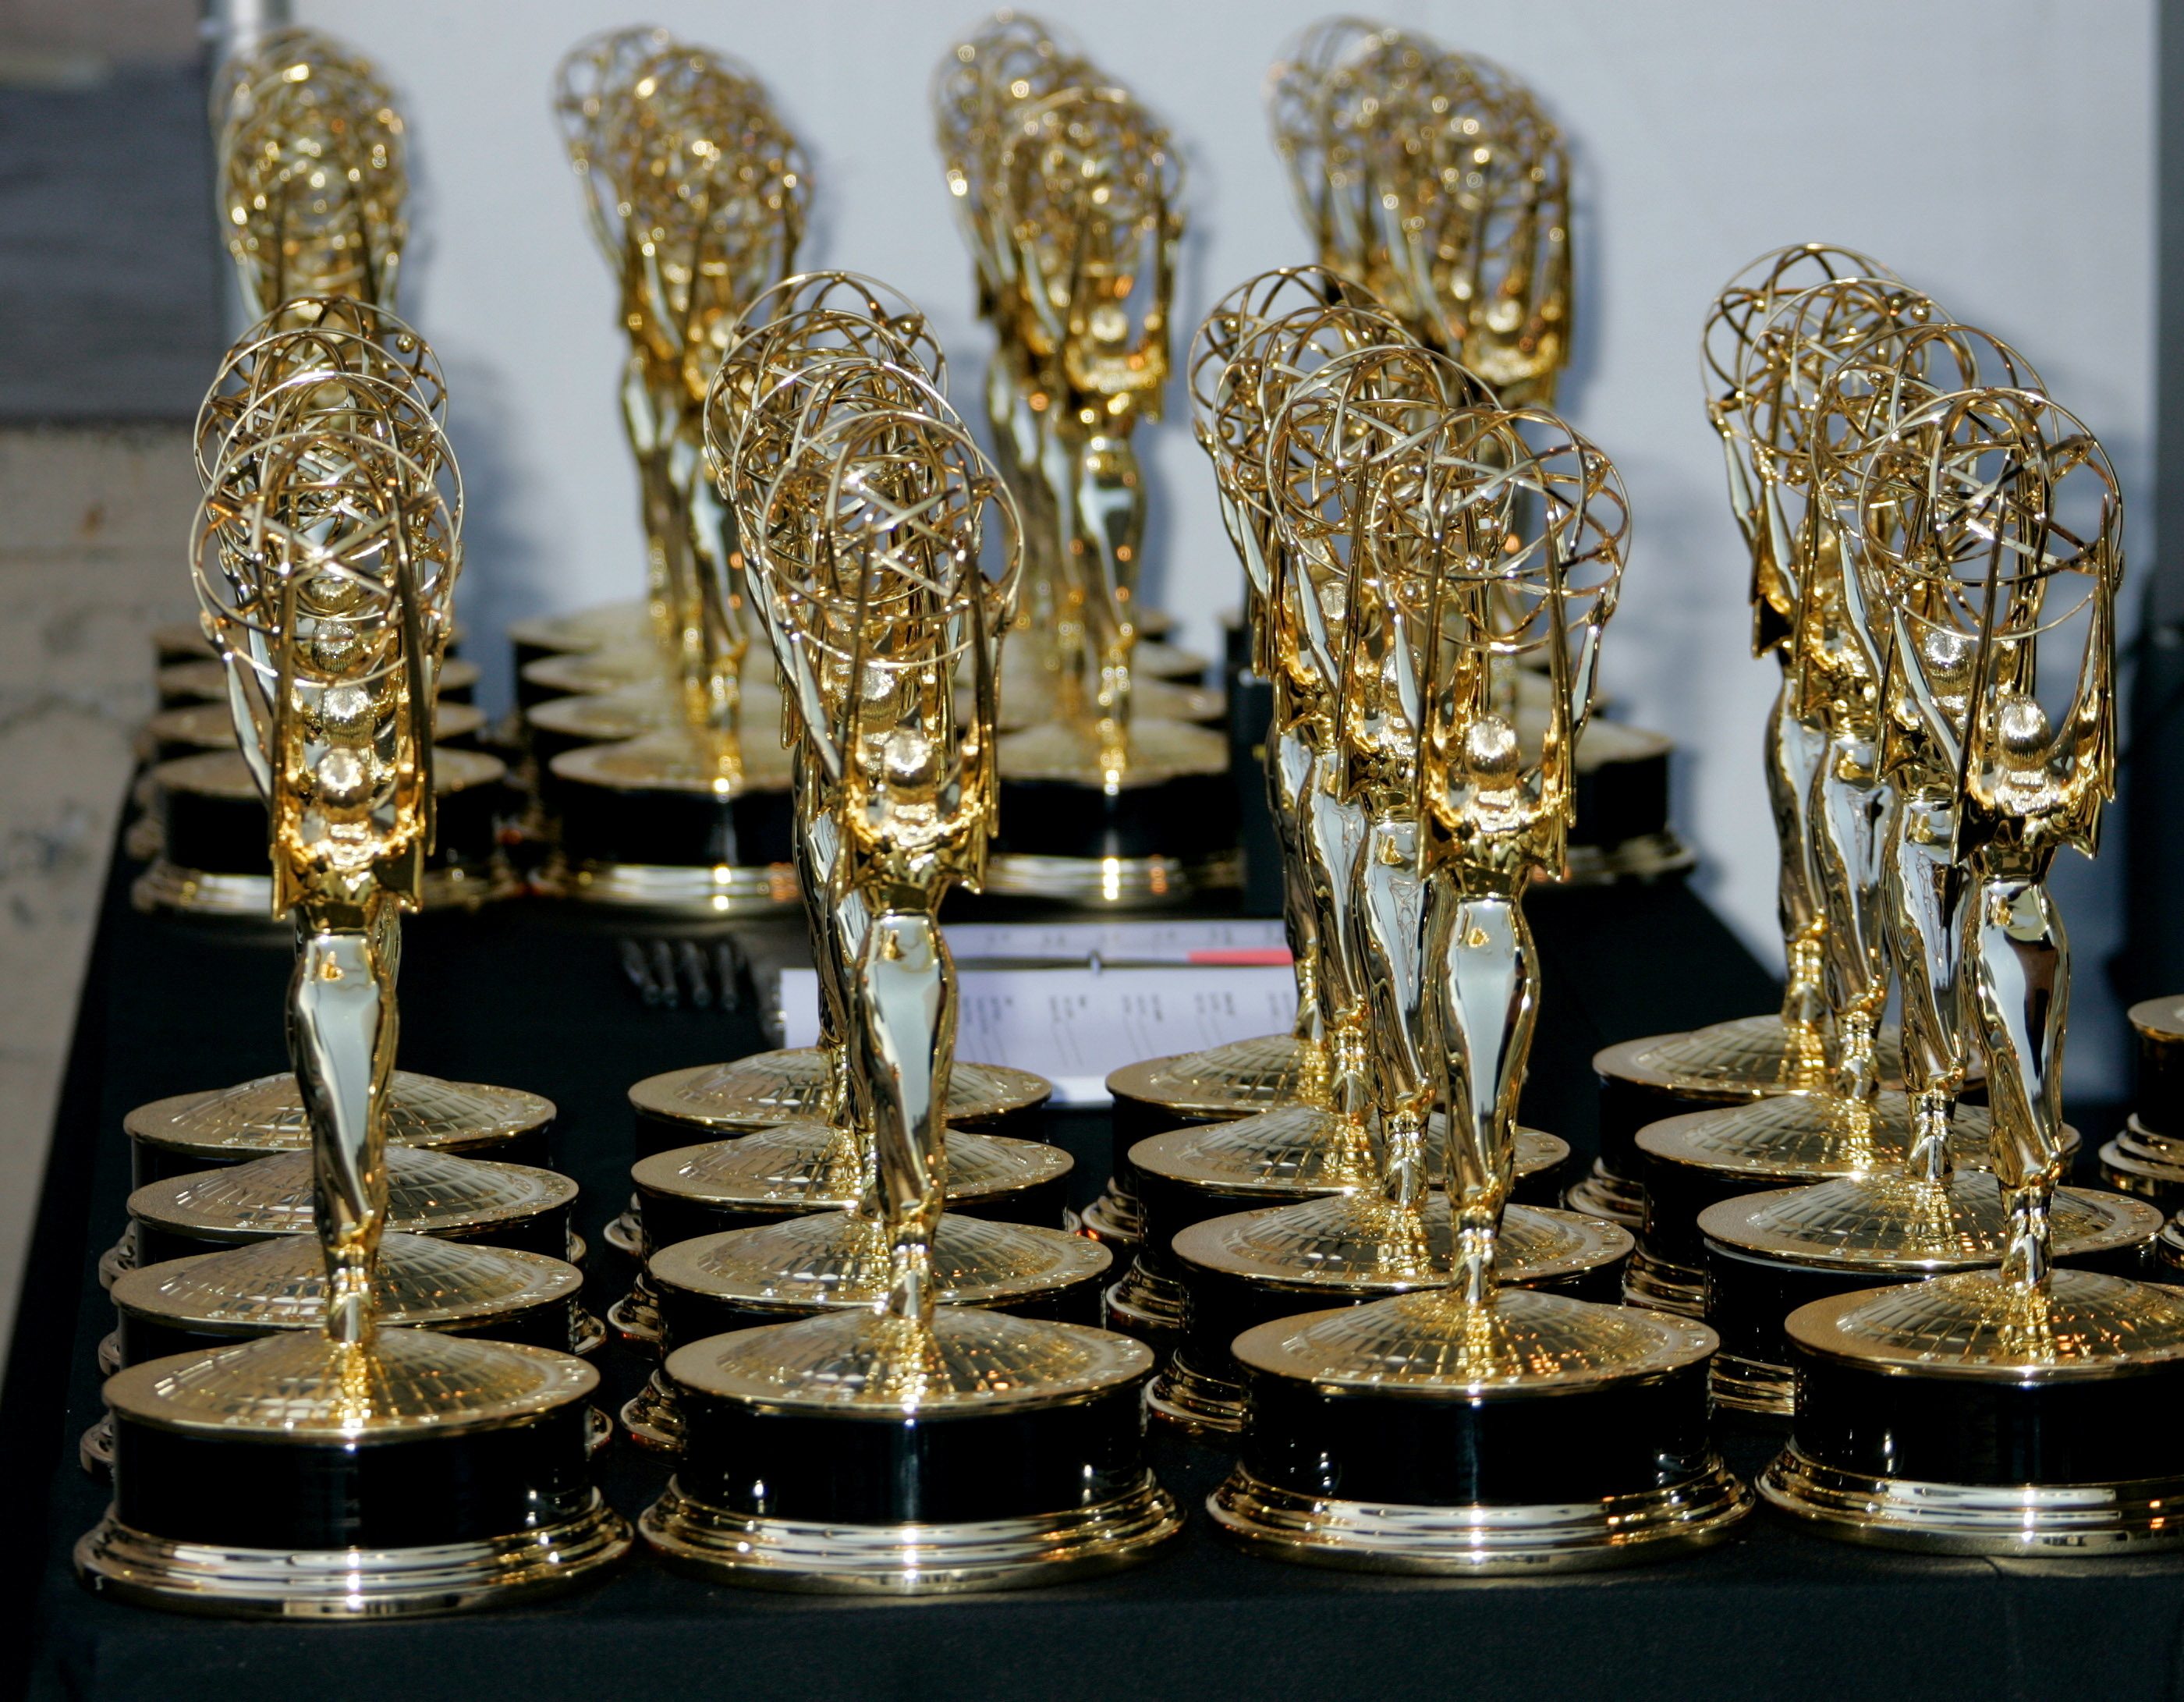 FULL LIST: Winners, Emmy Awards 2021